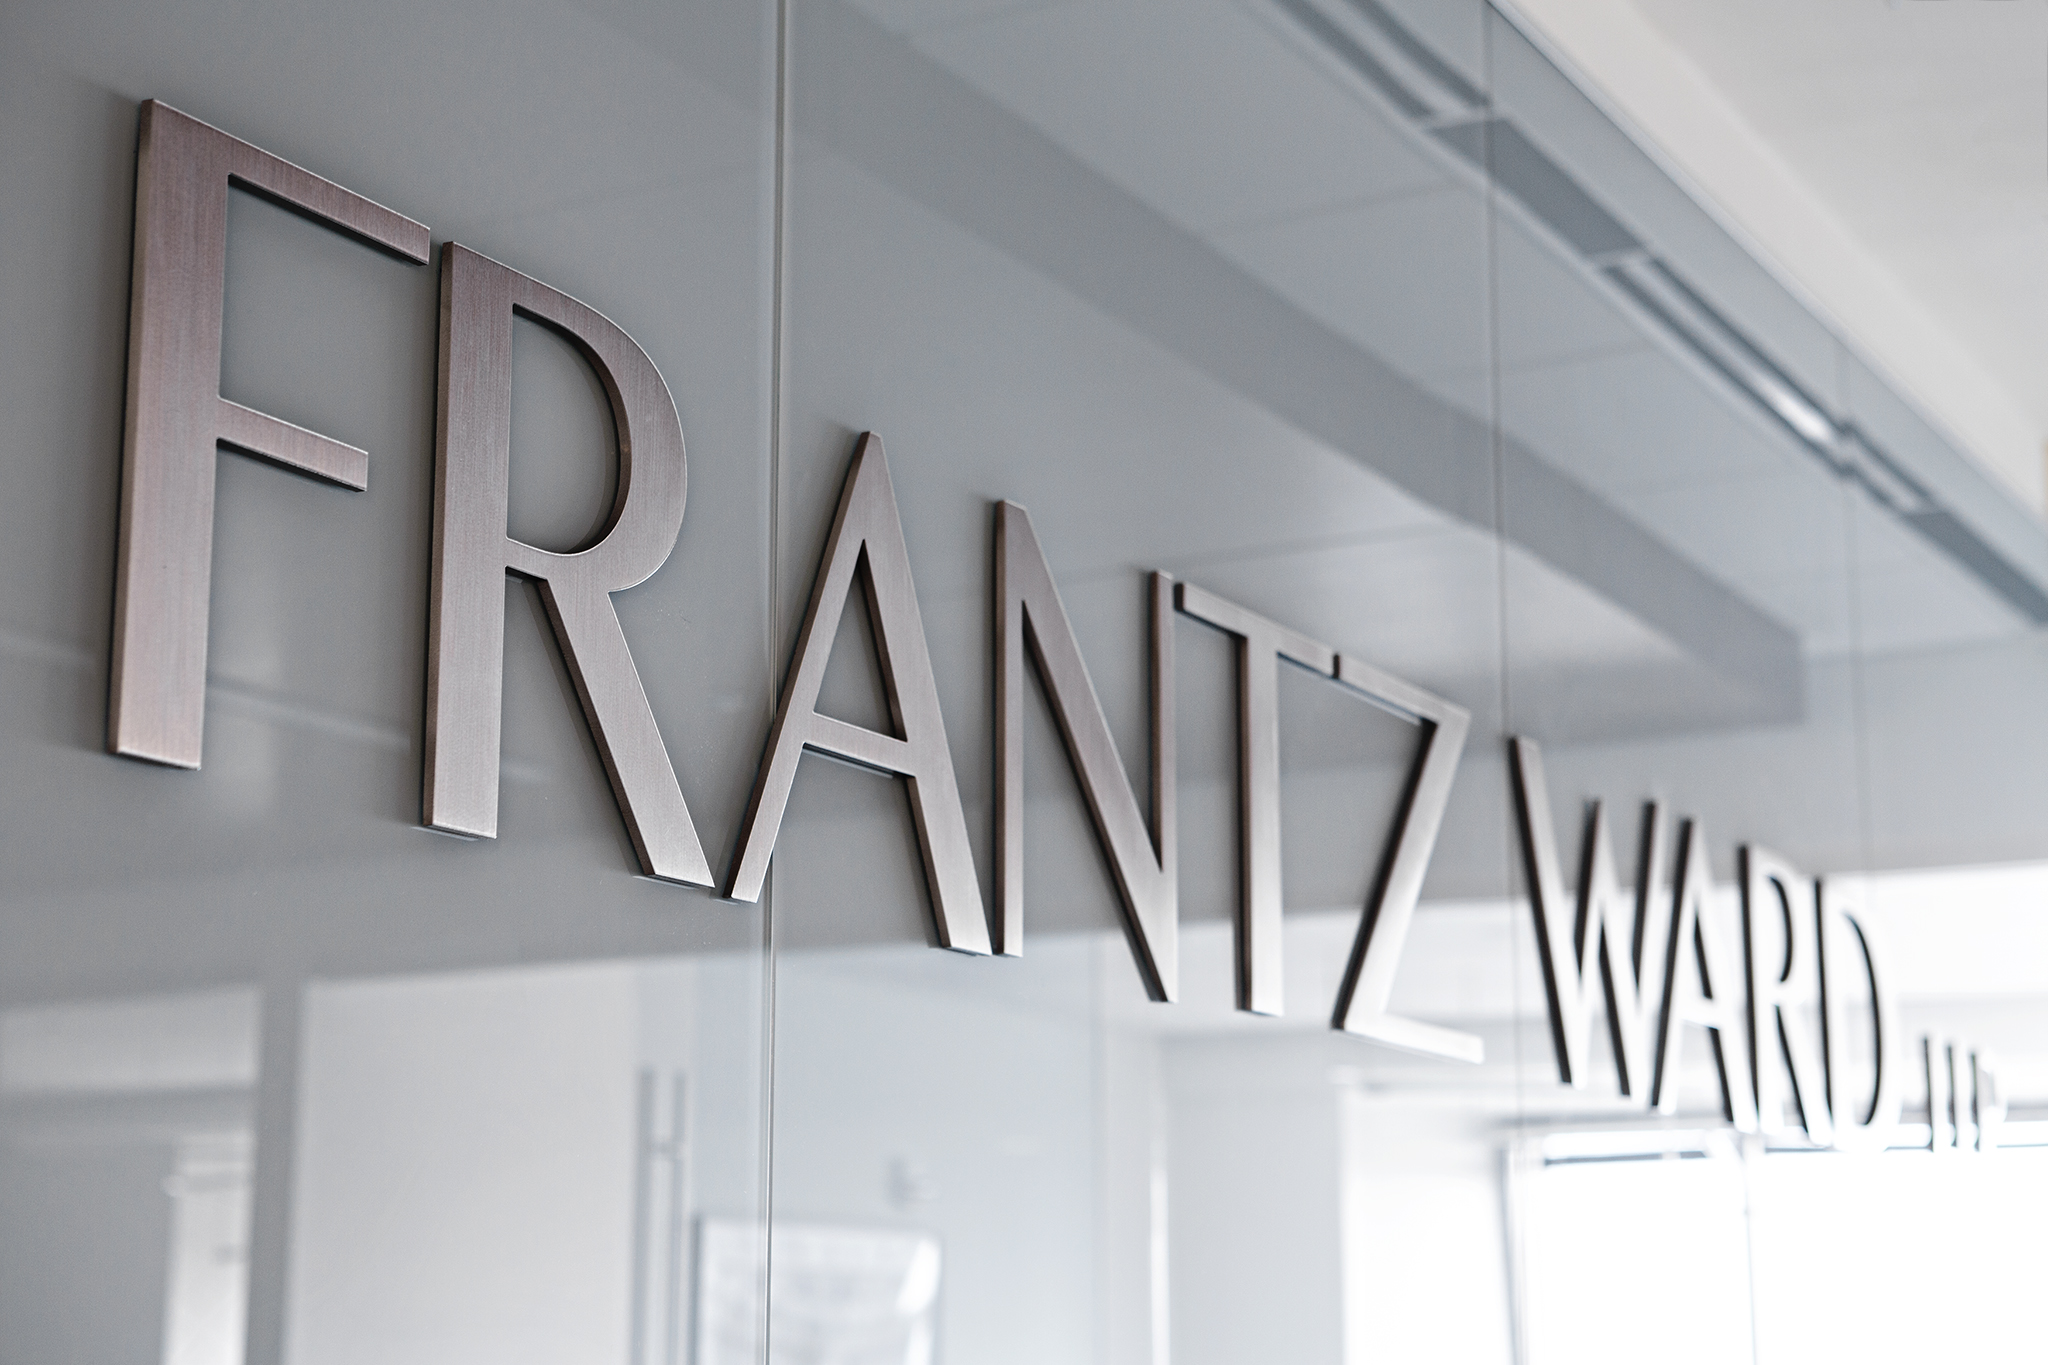 Frantz Ward Acquires Kadish, Hinkel & Weibel to Expand Capabilities and Better Service Clients Thumbnail